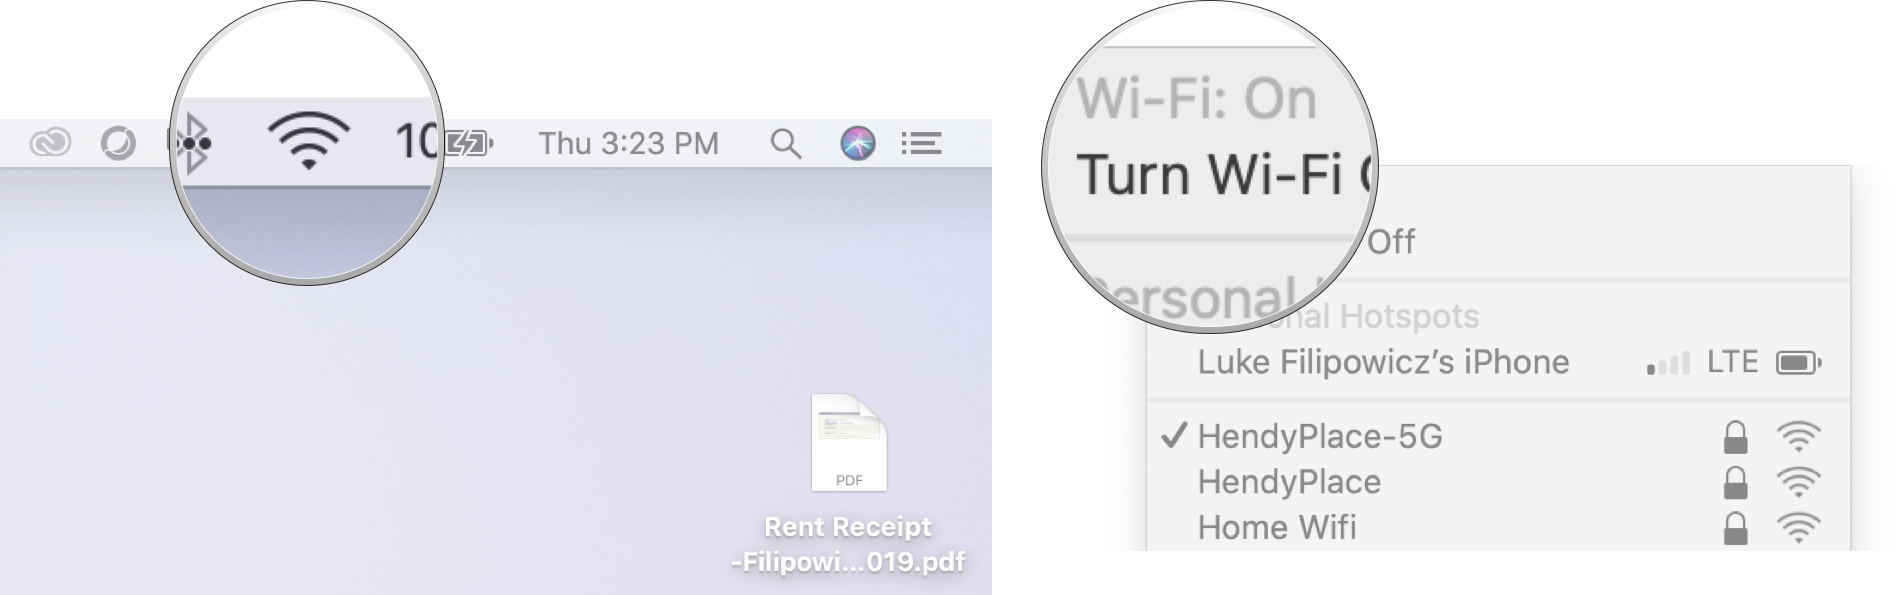 Turn on Wi-Fi on Mac: Click the Wi-Fi symbol from the Menubar and then click turn Wi-Fi off